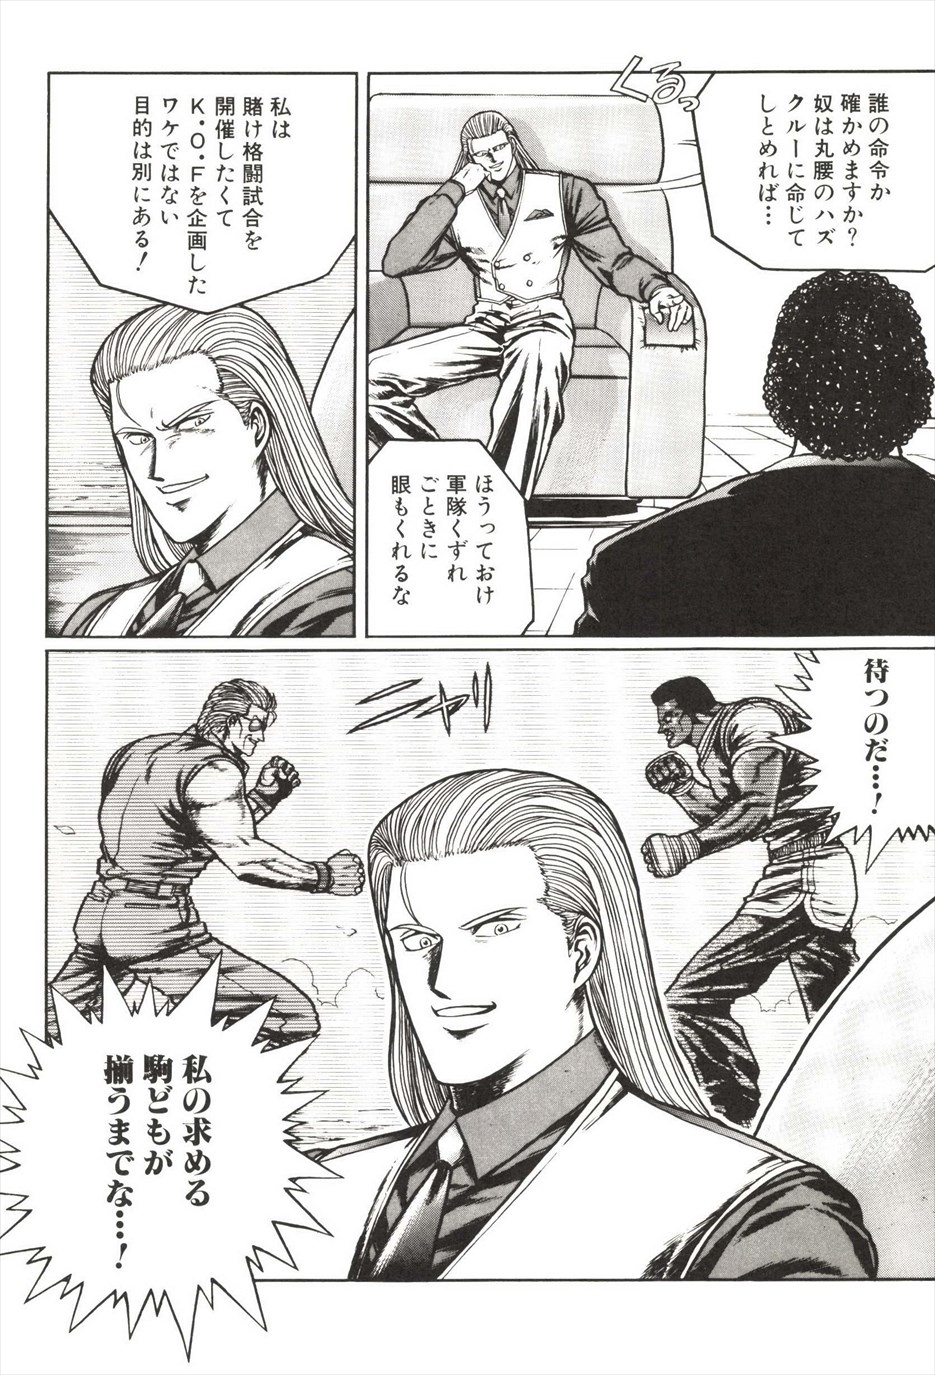 [amazishi etsuya] ART OF FIGHTING ryuuko no ken 2-2 44